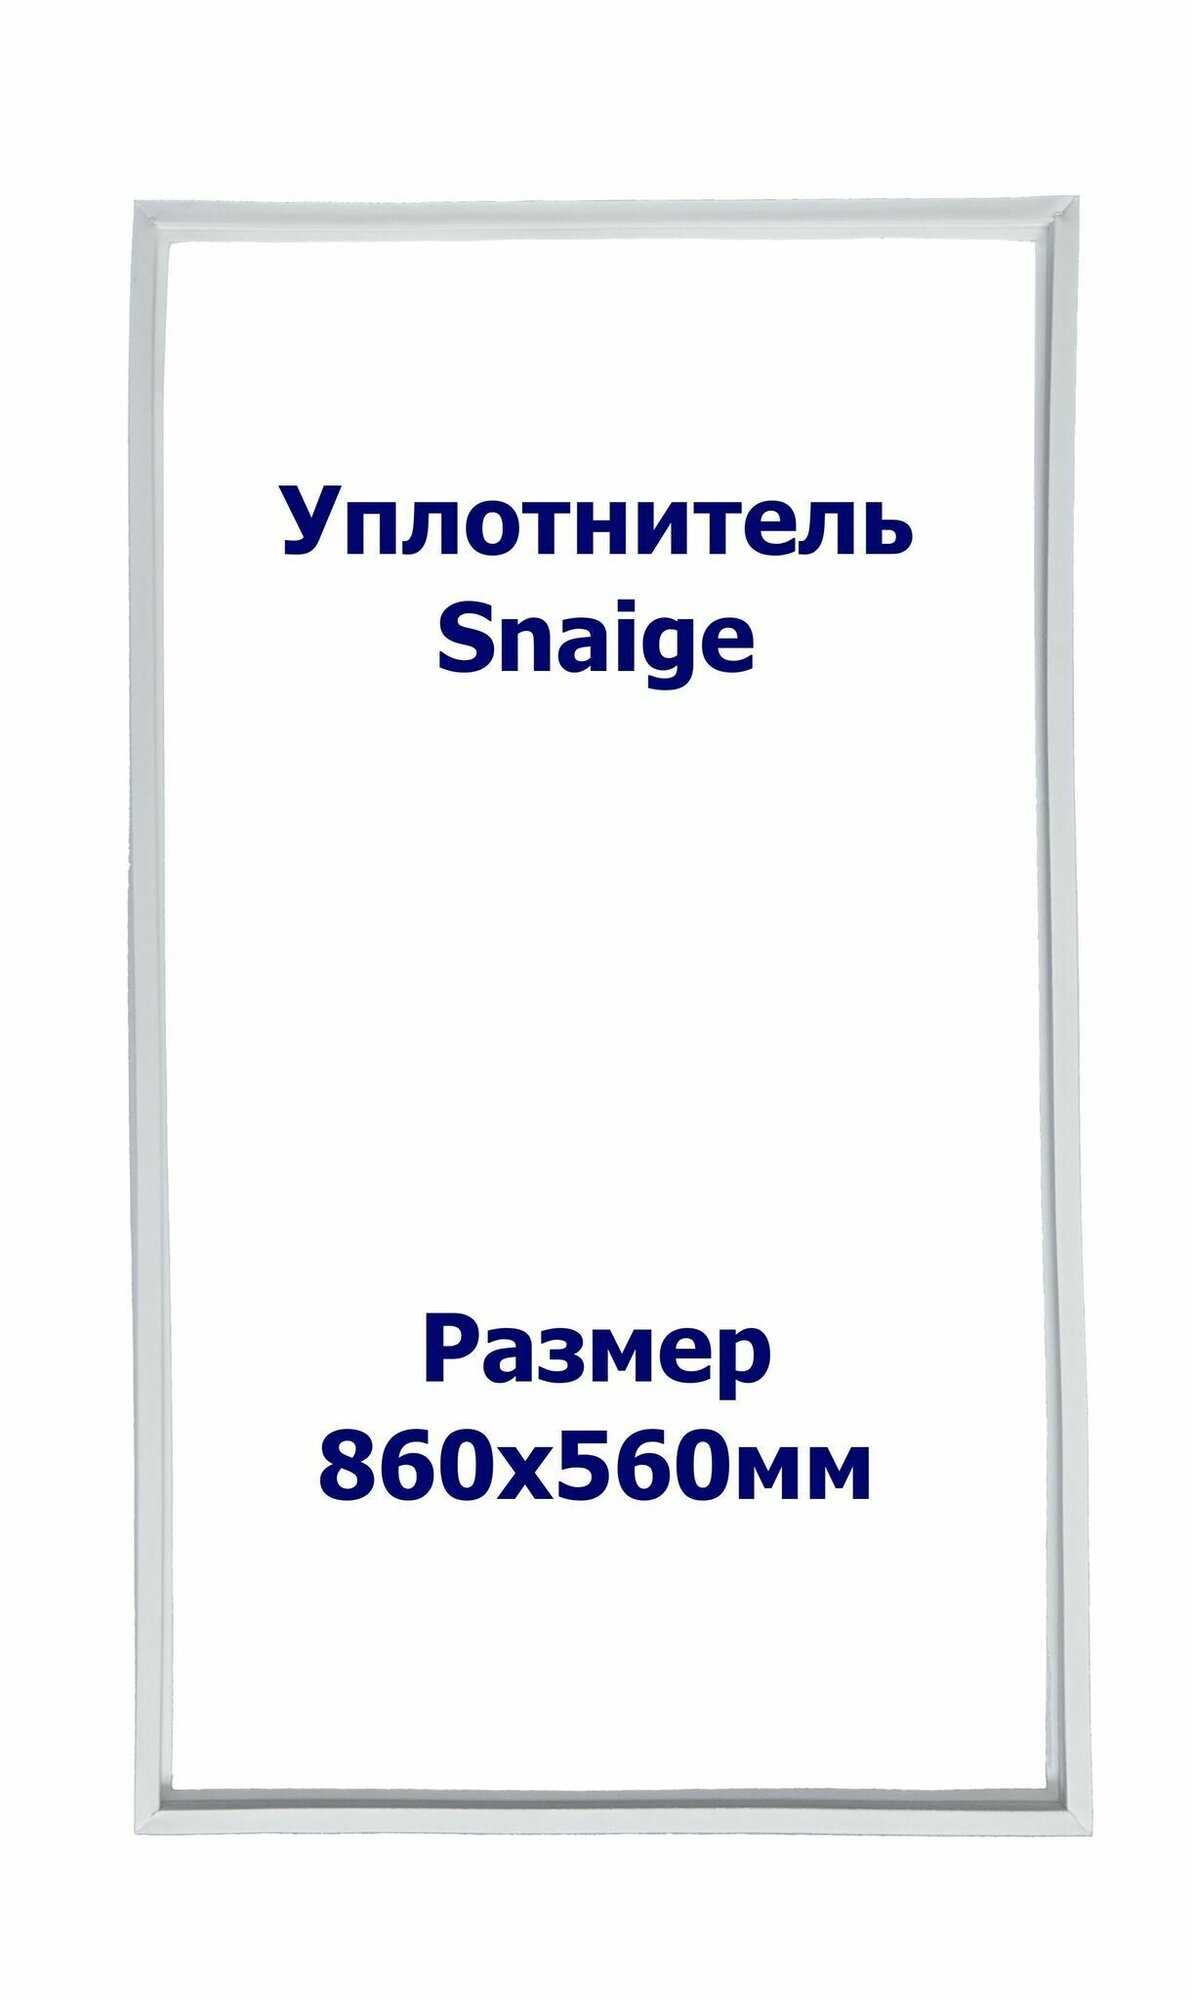 Уплотнитель Snaige RF 310. х. к, Размер - 860х560 мм. SK